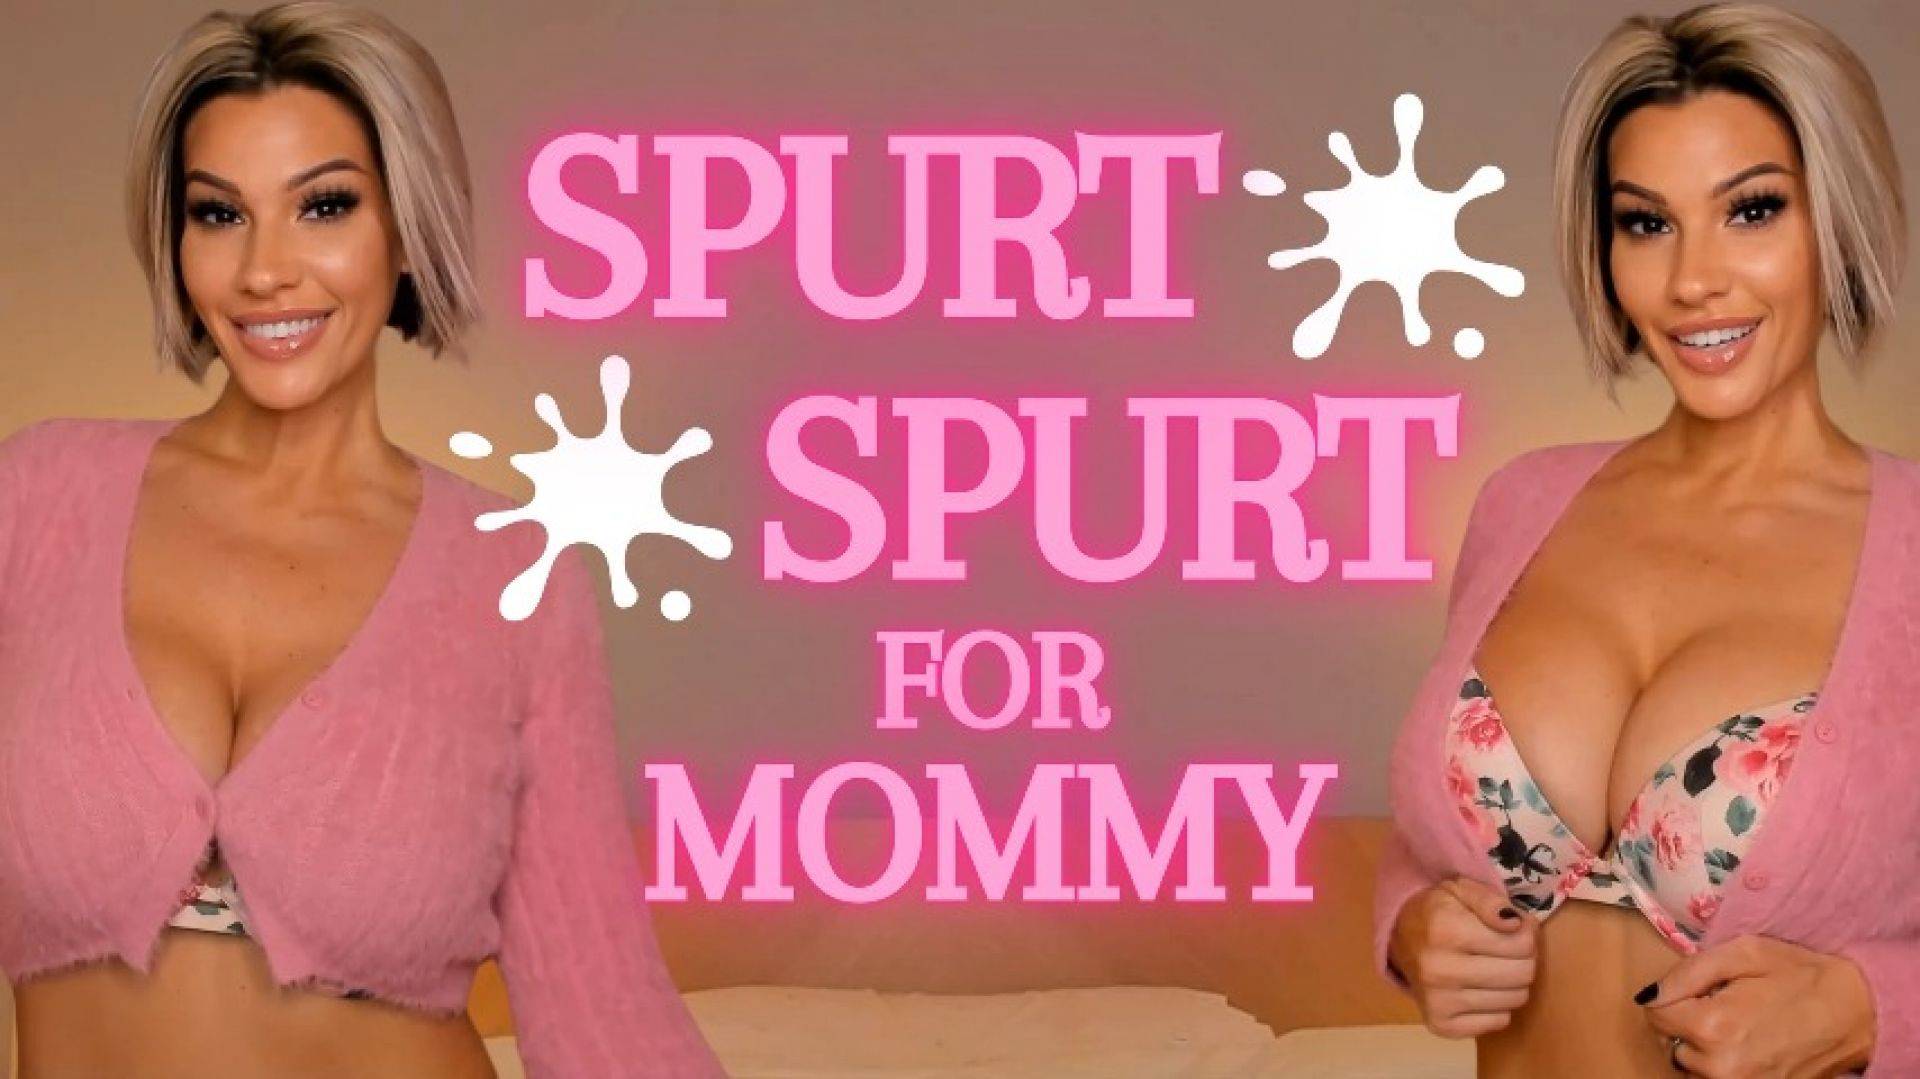 Spurt Spurt for Mommy